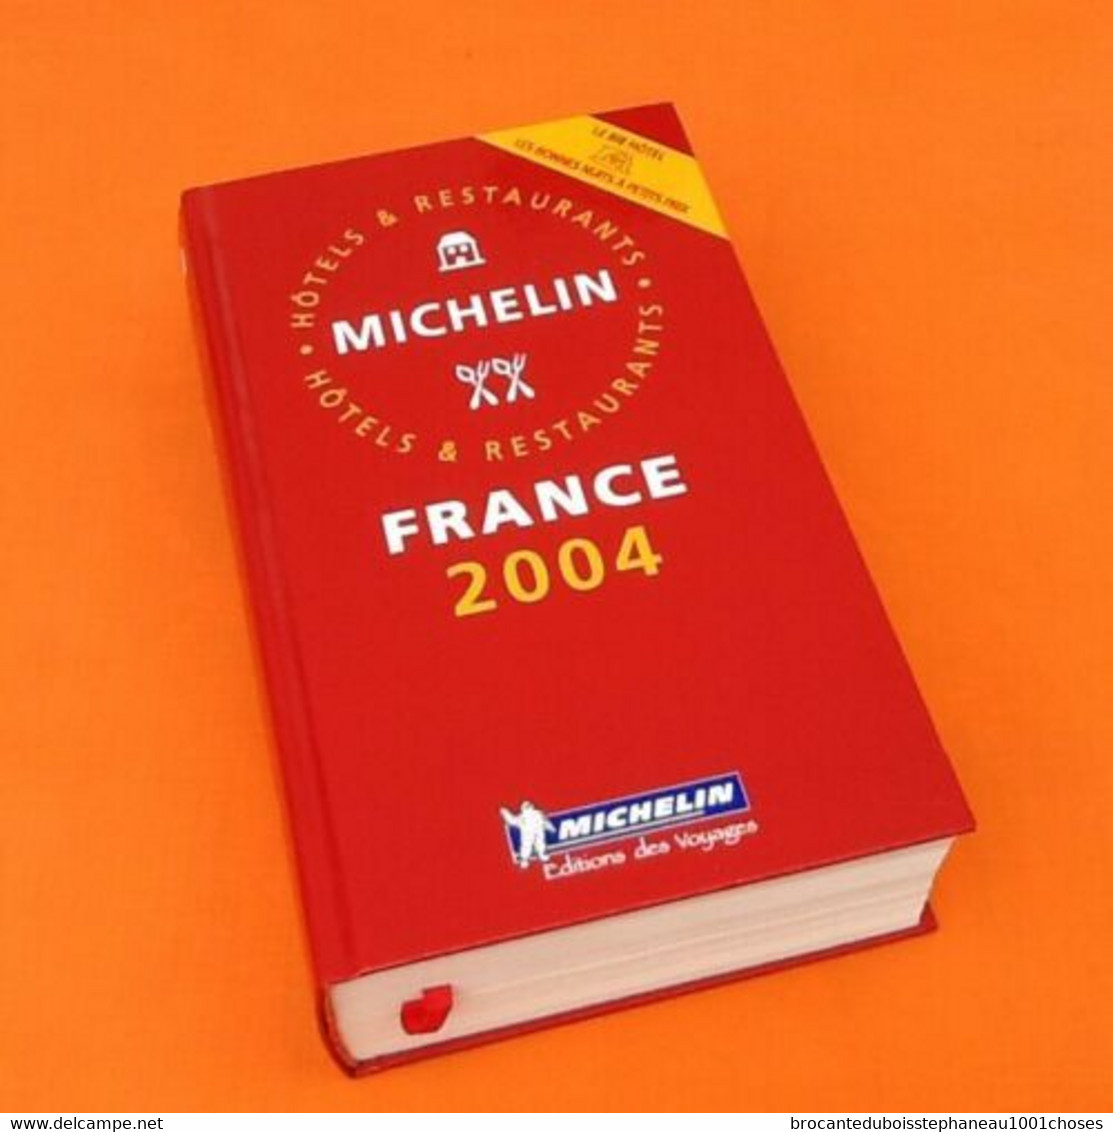 Guide Michelin France (2004)   Hôtels-Restaurants  1823 Pages   (200x115x45)mm - Michelin-Führer